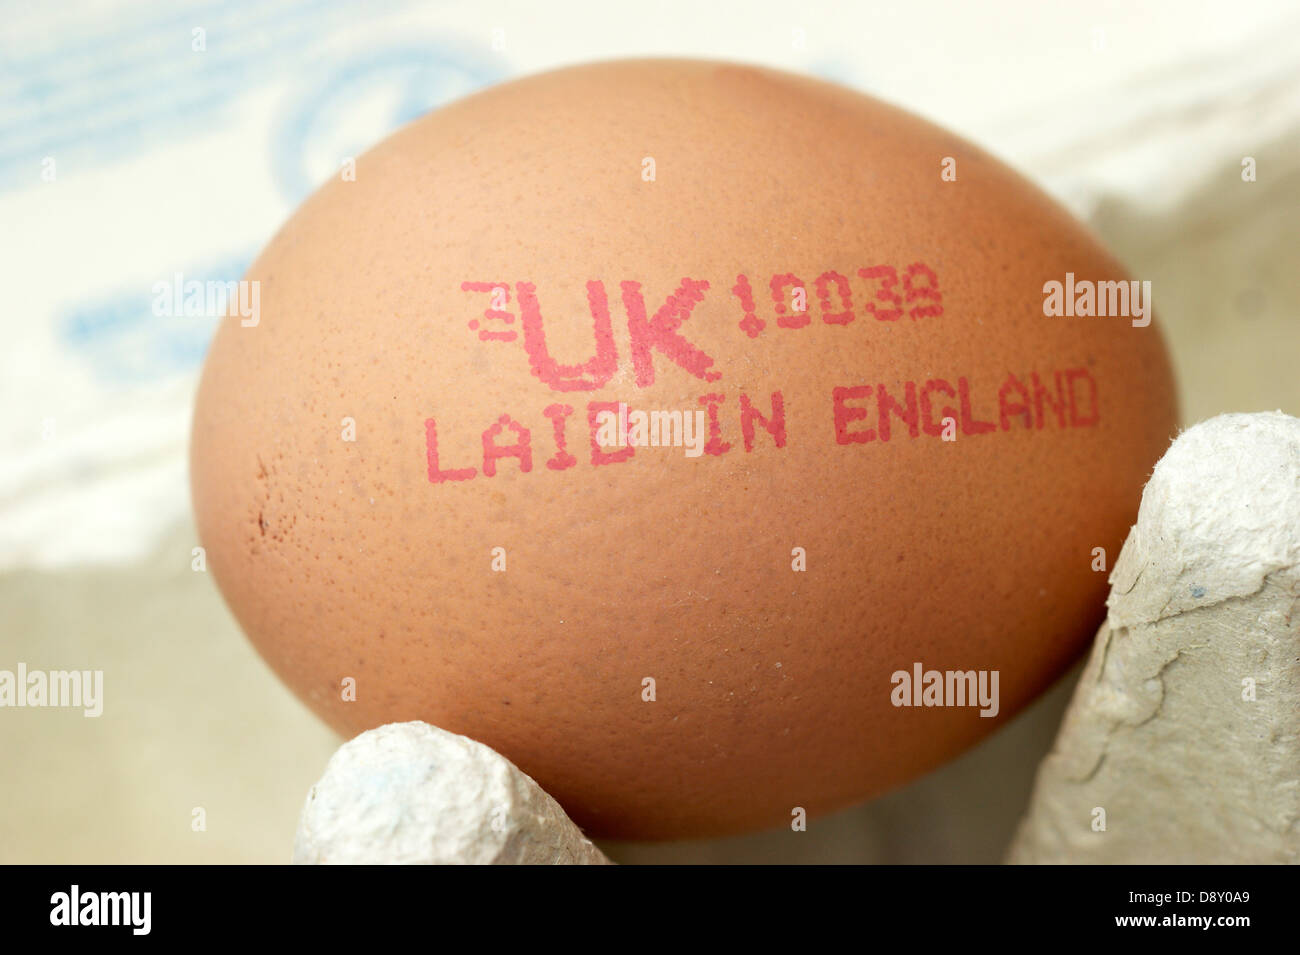 Free range egg laid in England Stock Photo